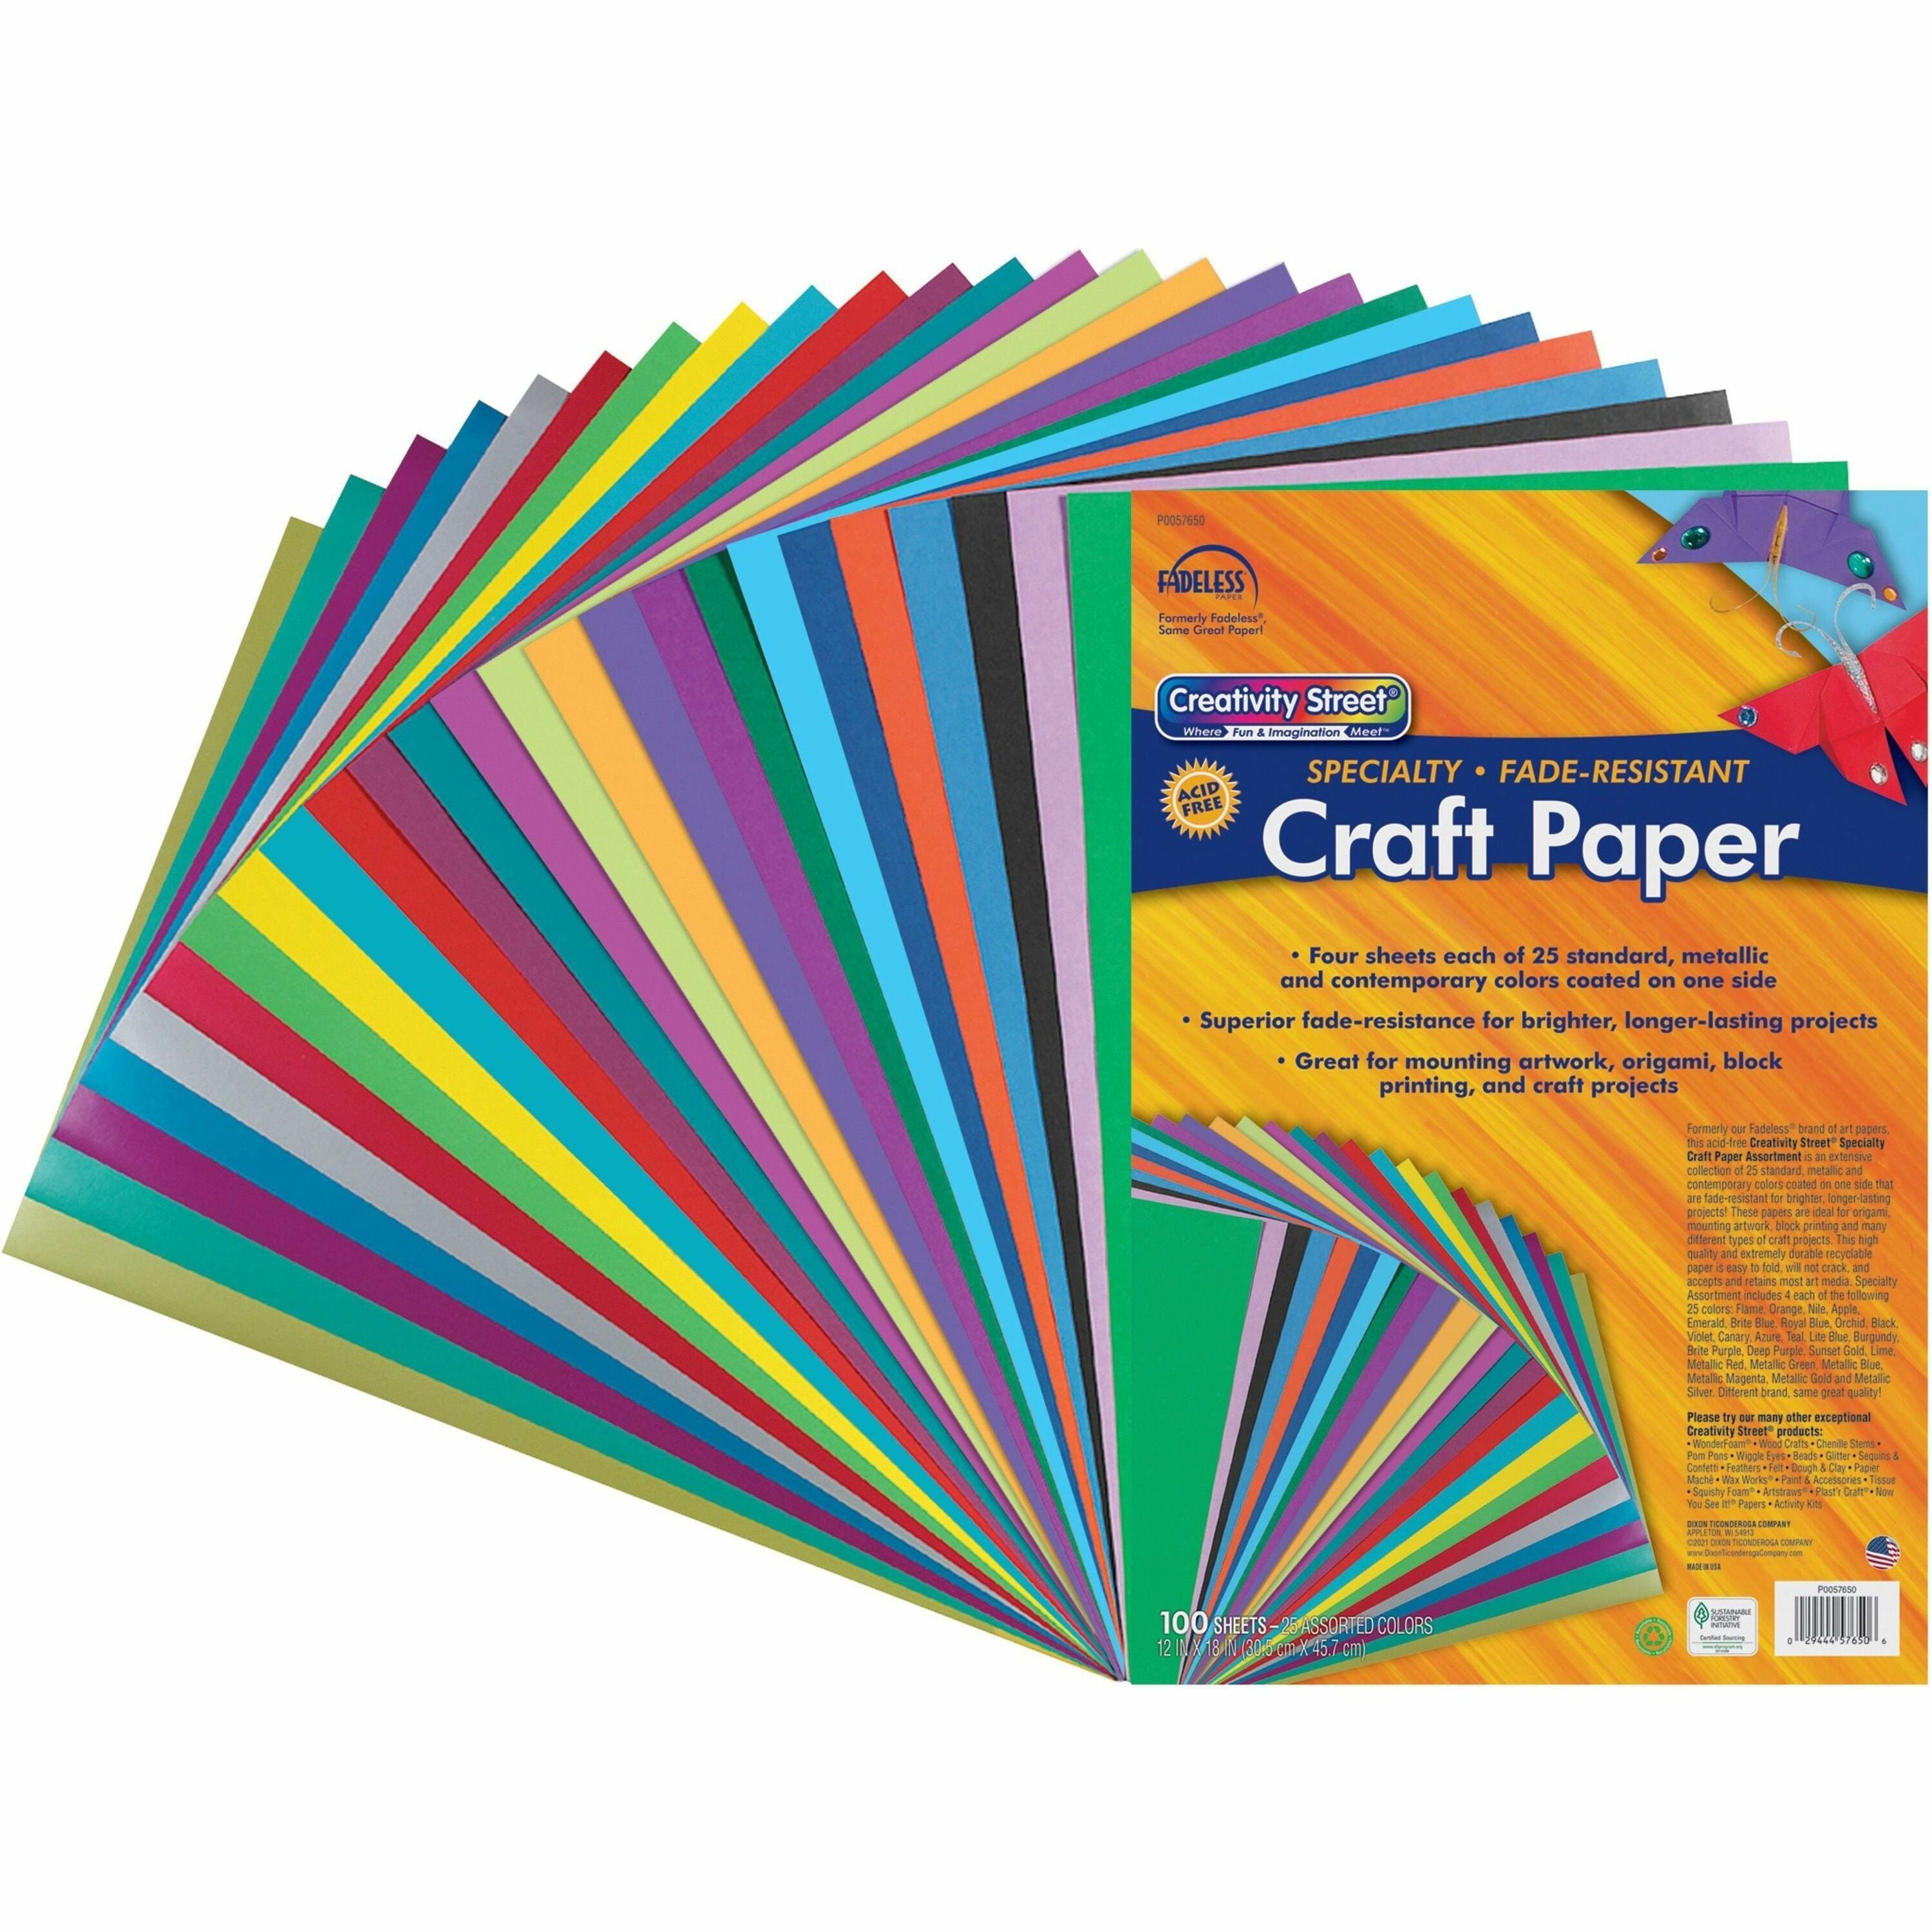 Creativity Street Designer Art Paper Sheets - Creativity Street Specialty Craft Paper - 1